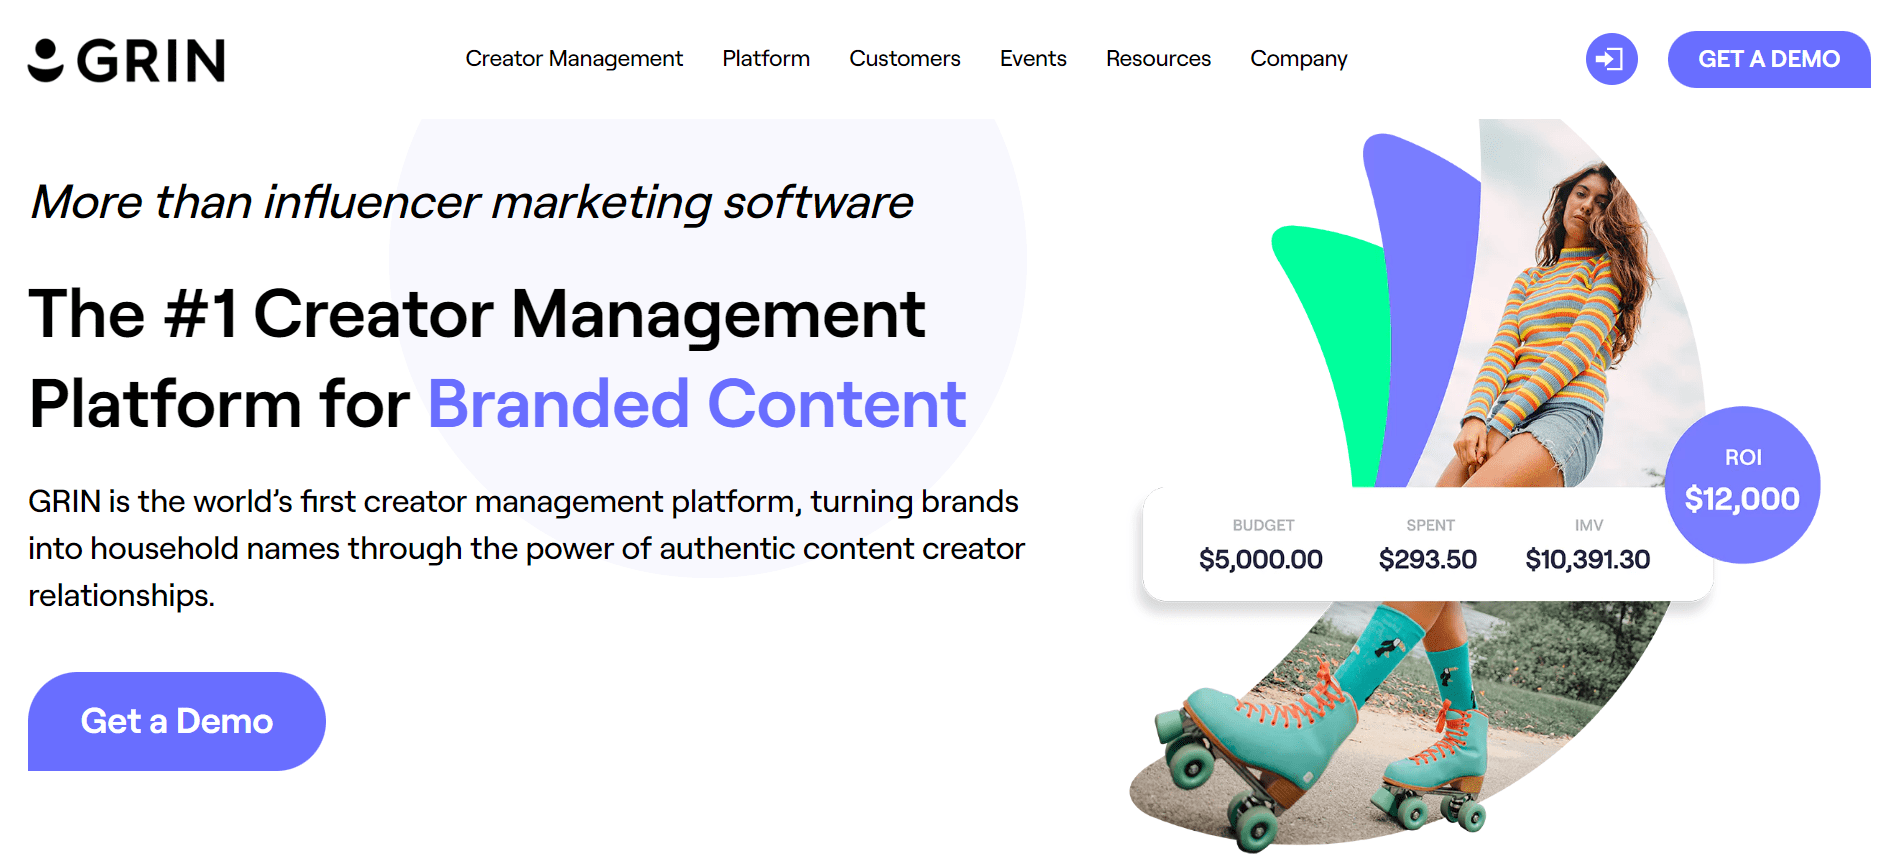 grin best creator management platform